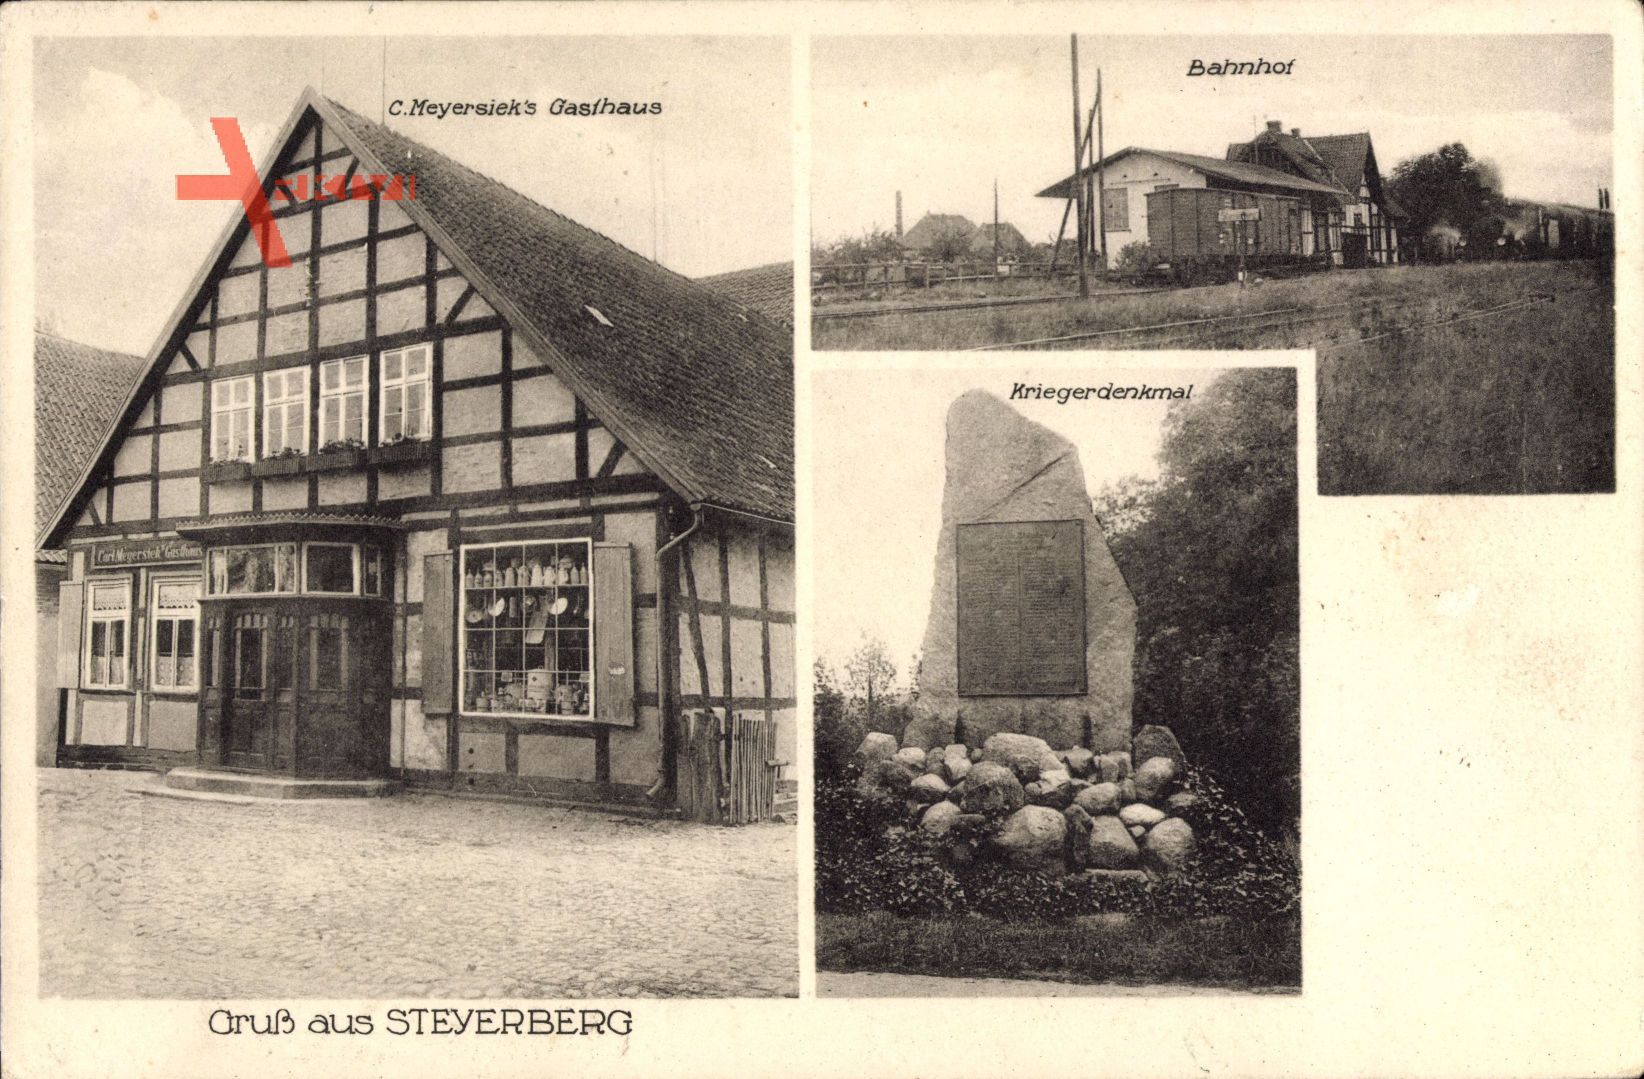 Steyerberg, Bahnhof, Kriegerdenkmal, Meyersieks Gasthaus